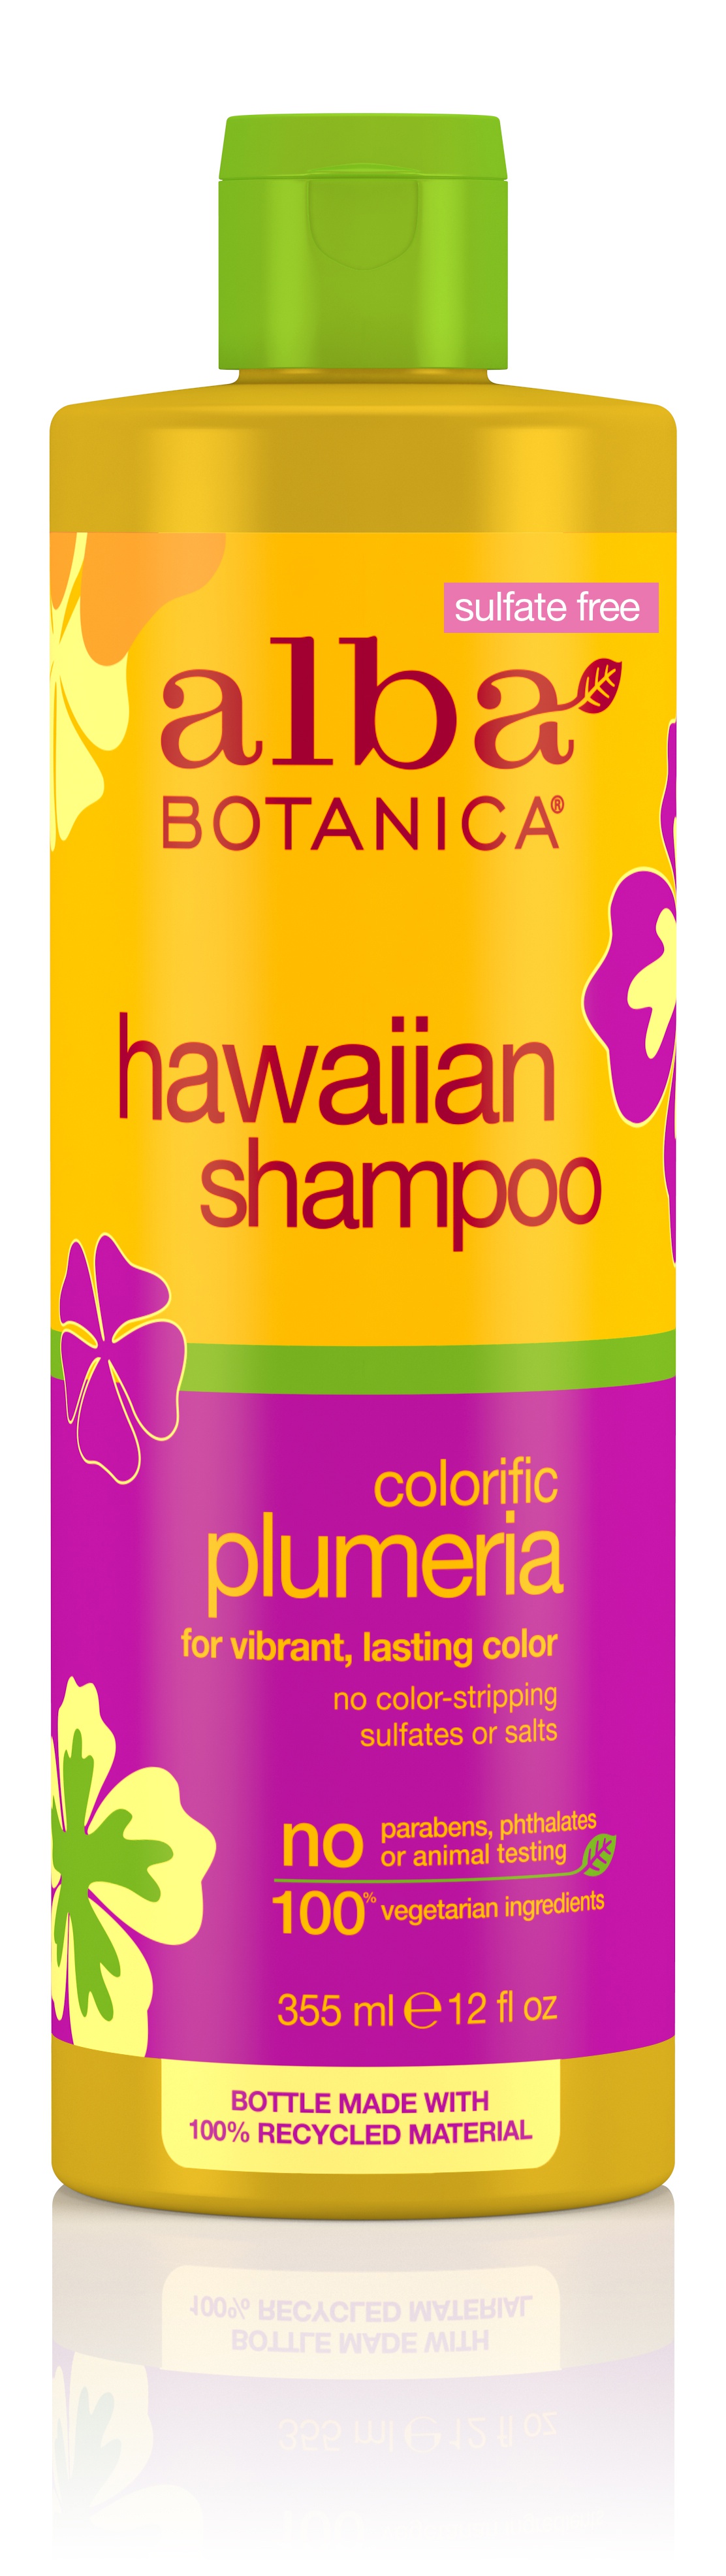 Alba Botanica Natural Hawaiian Shampoo Colorific Plumeria